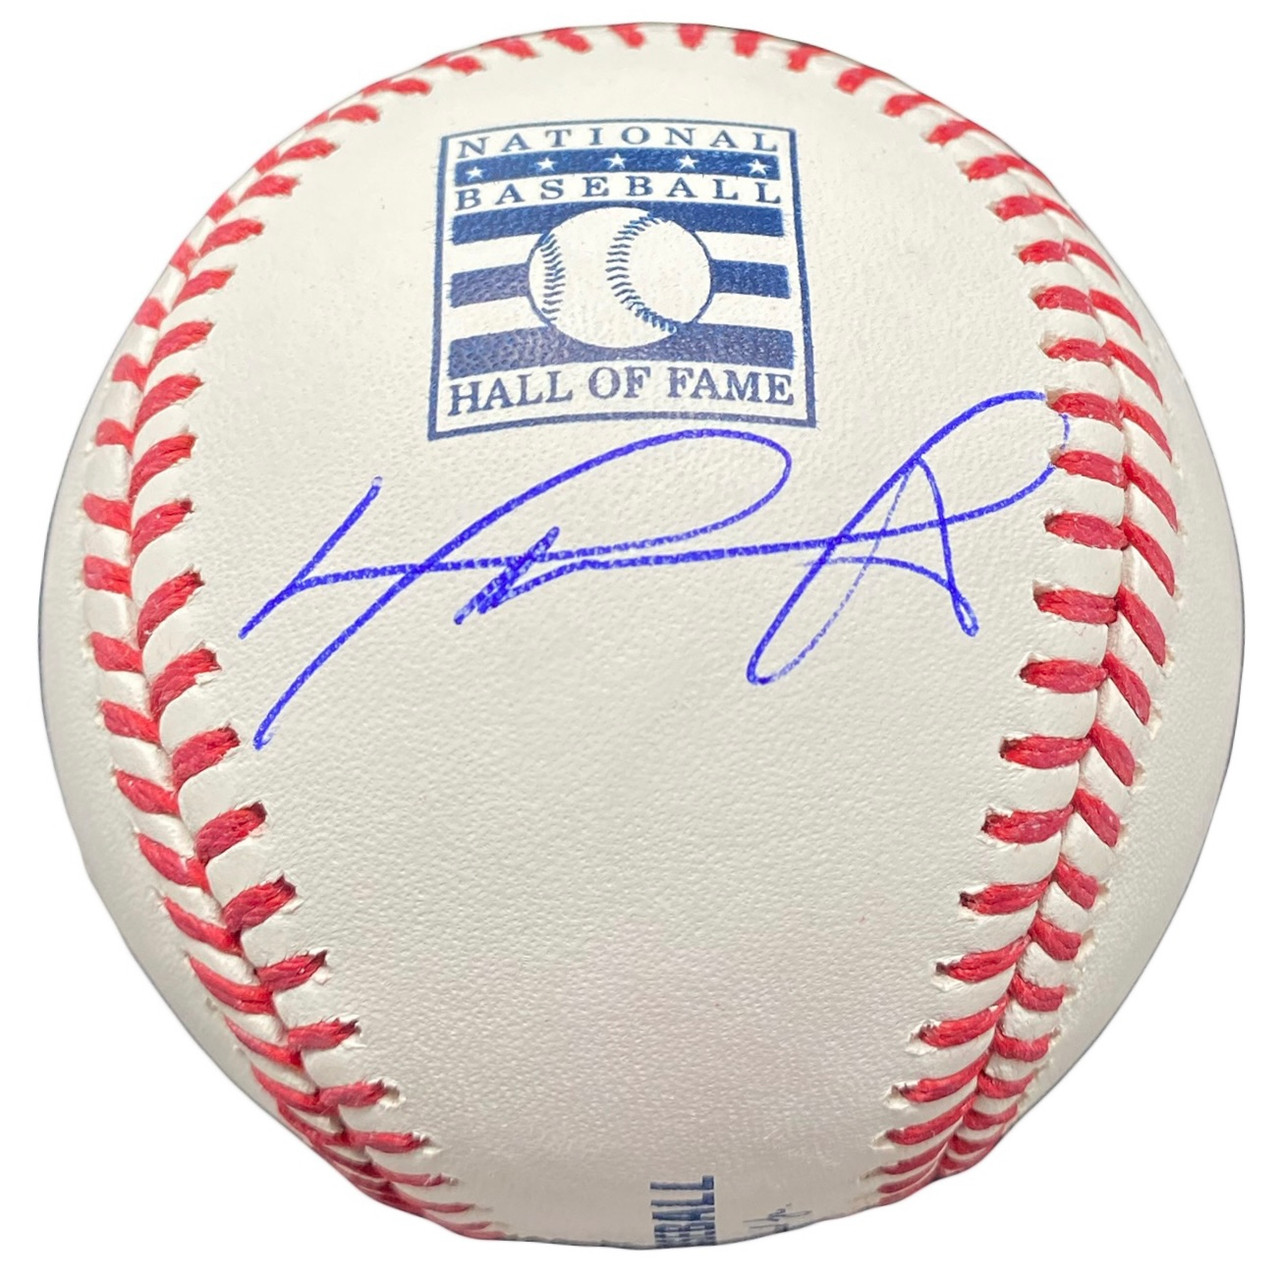 DAVID ORTIZ Boston Red Sox Autographed Baseball with HOF 22 Inscription  FANATICS - Game Day Legends